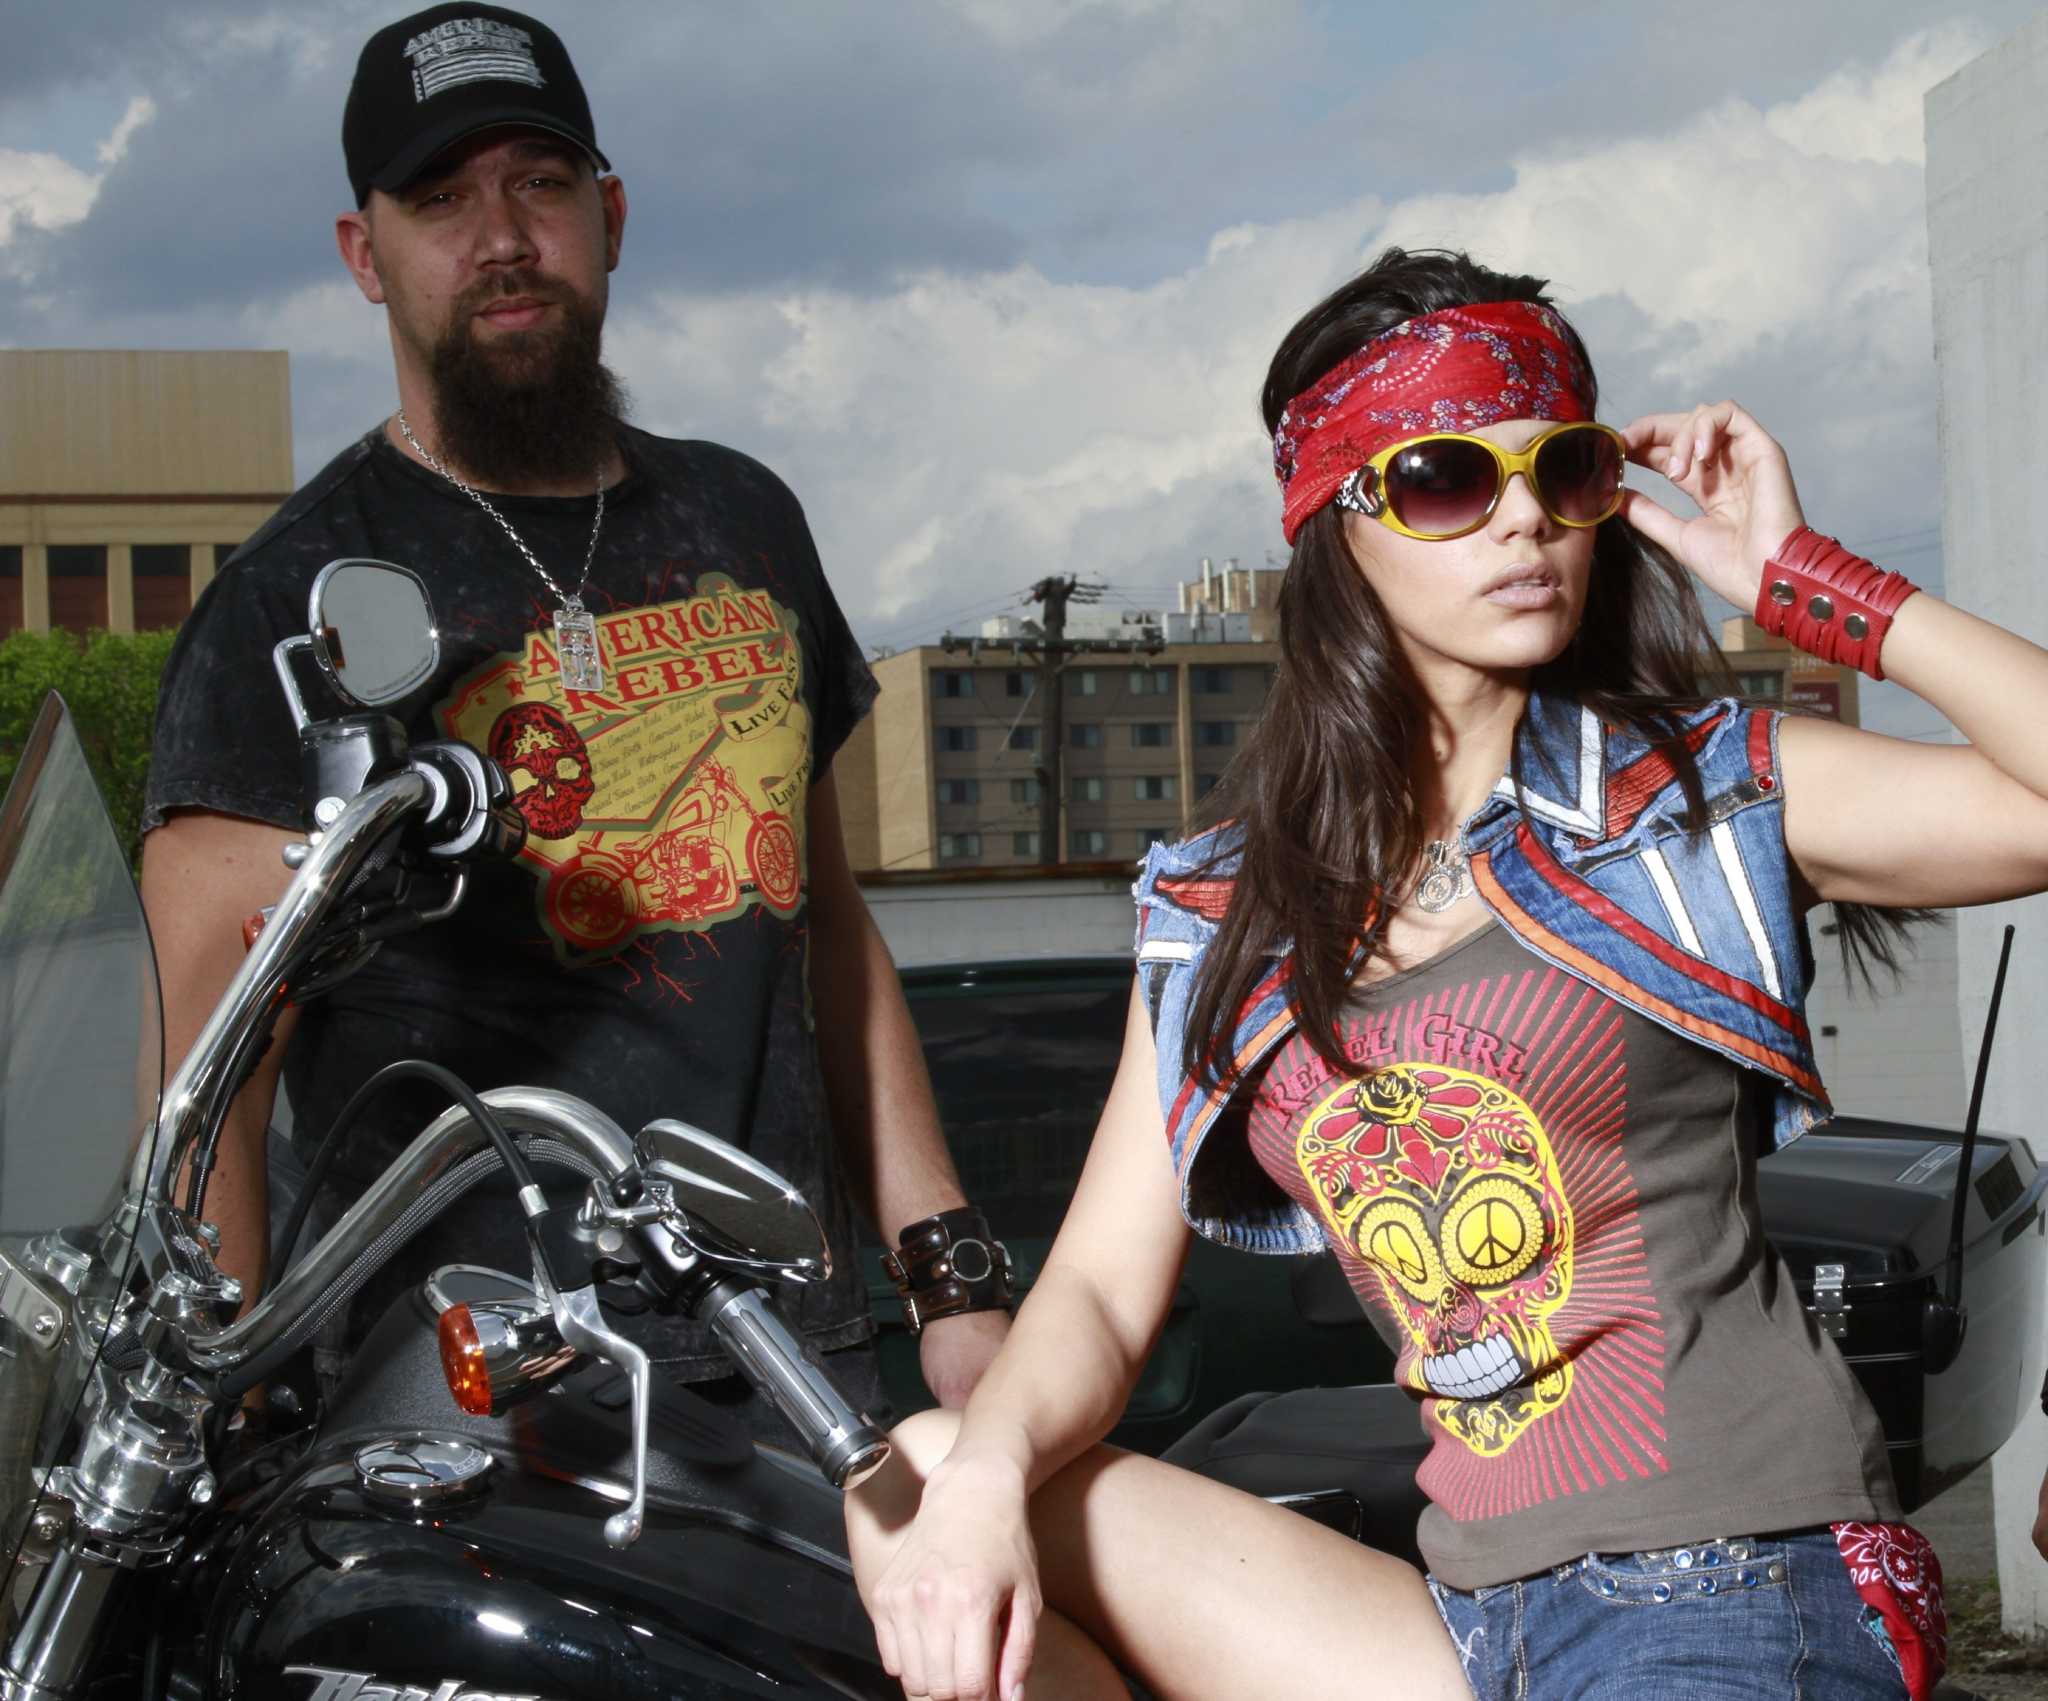 Rebel rider: Lone Star Rally inspires biker style